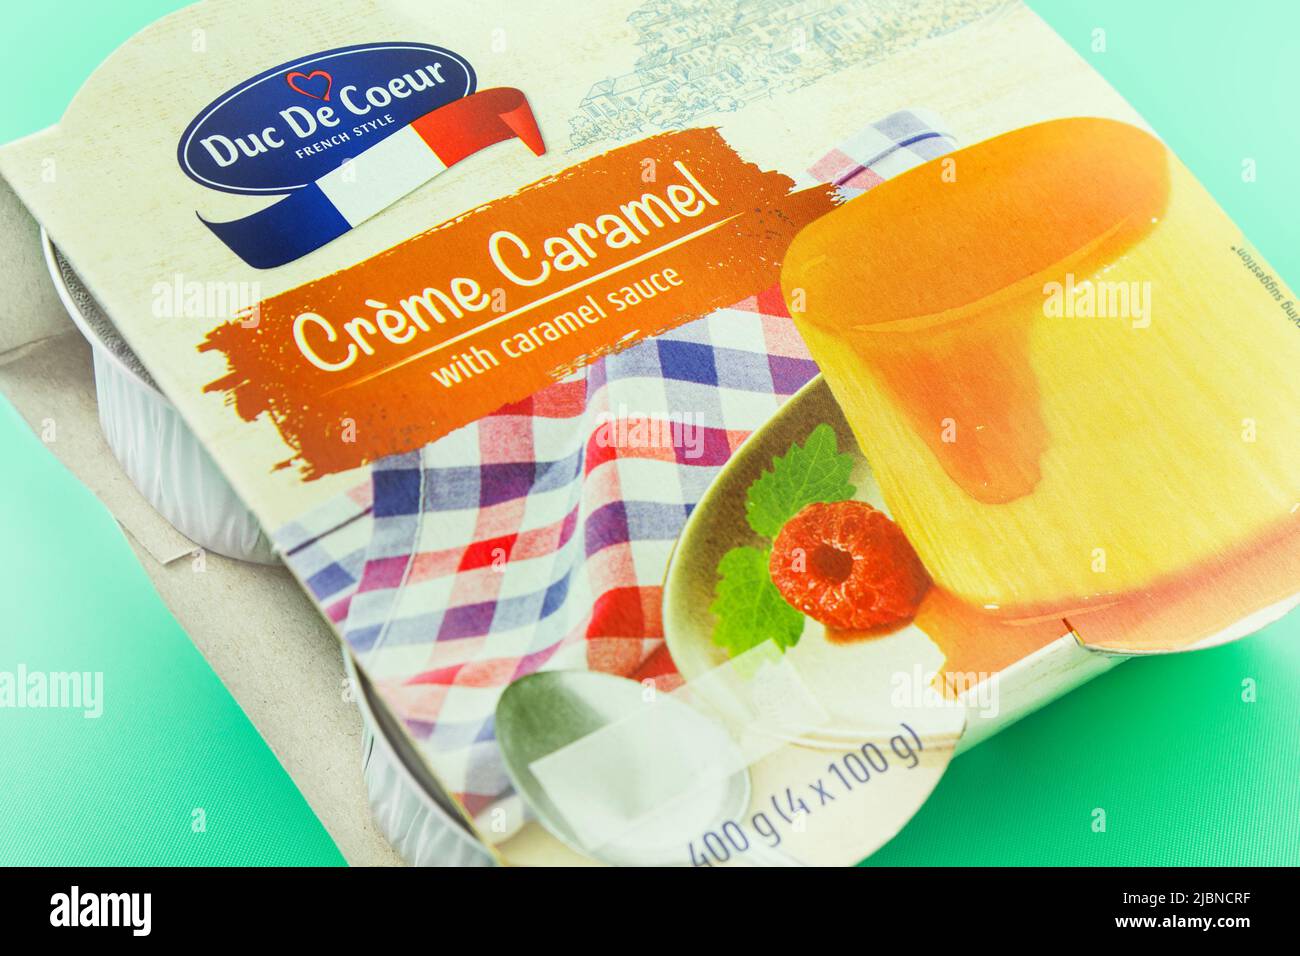 4 Duc de Coeur Creme Caramel Stock Photo - Alamy